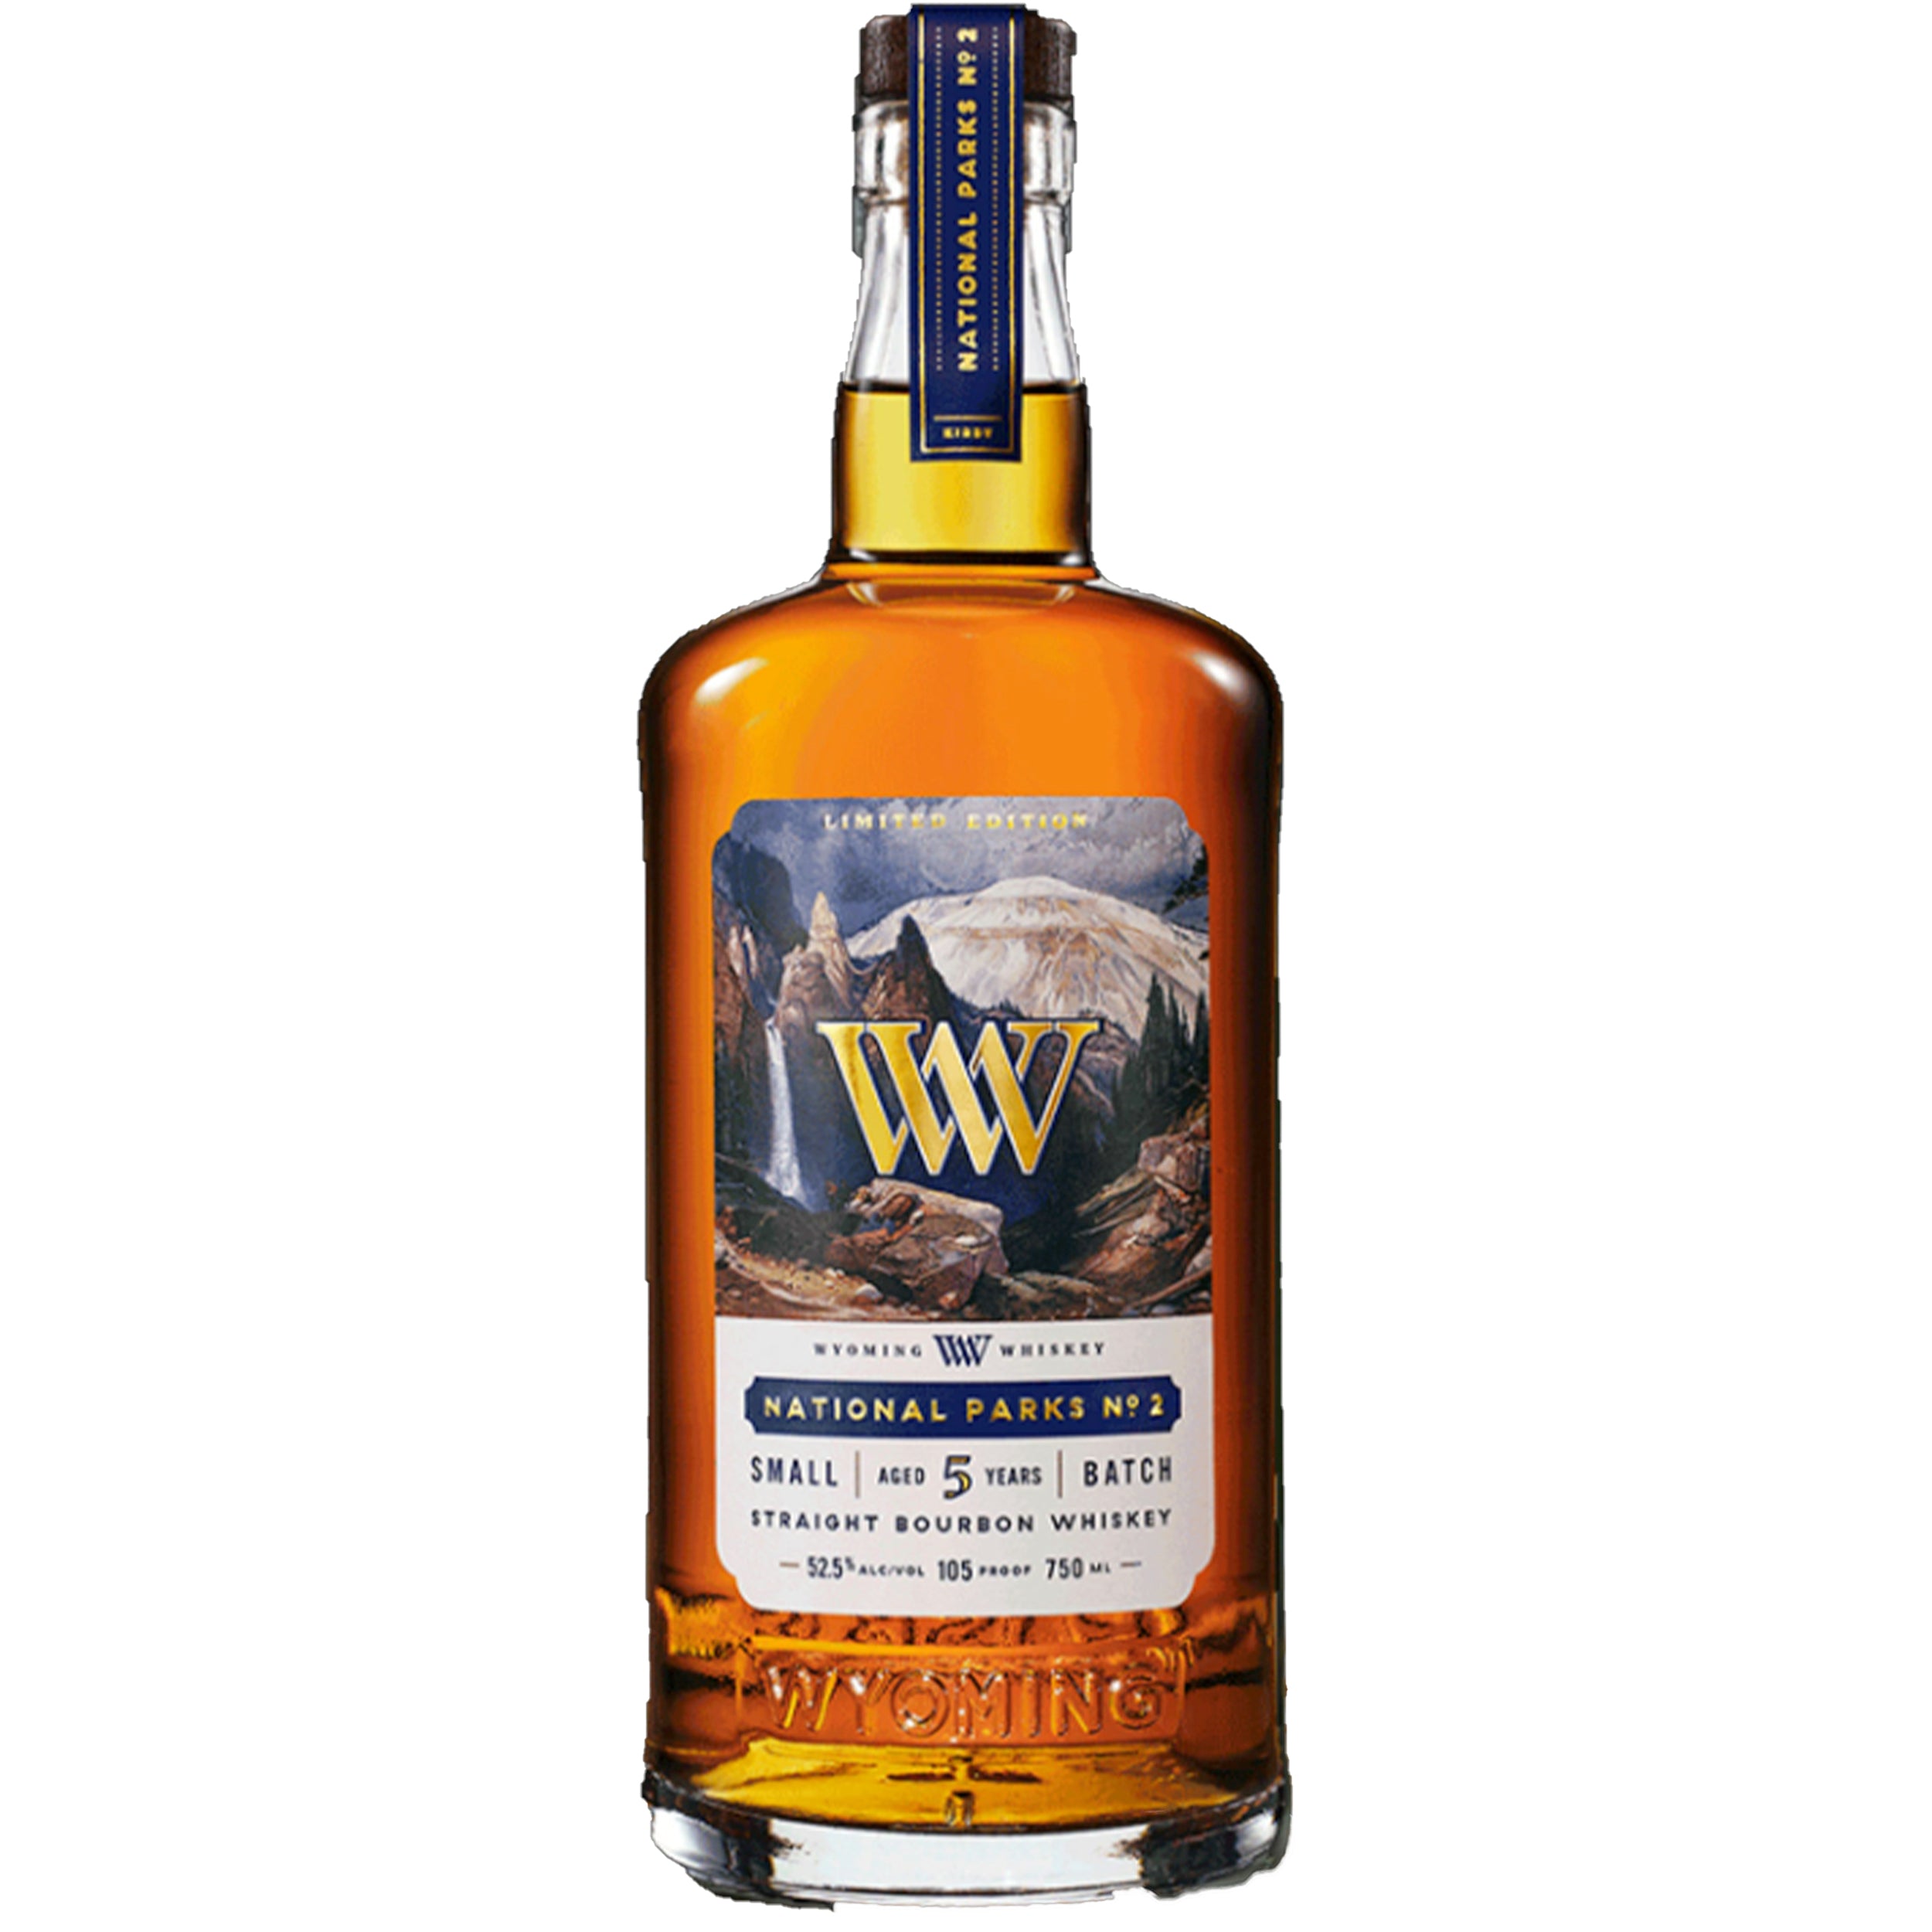 Wyoming Whiskey National Parks No.2 Bourbon Whiskey